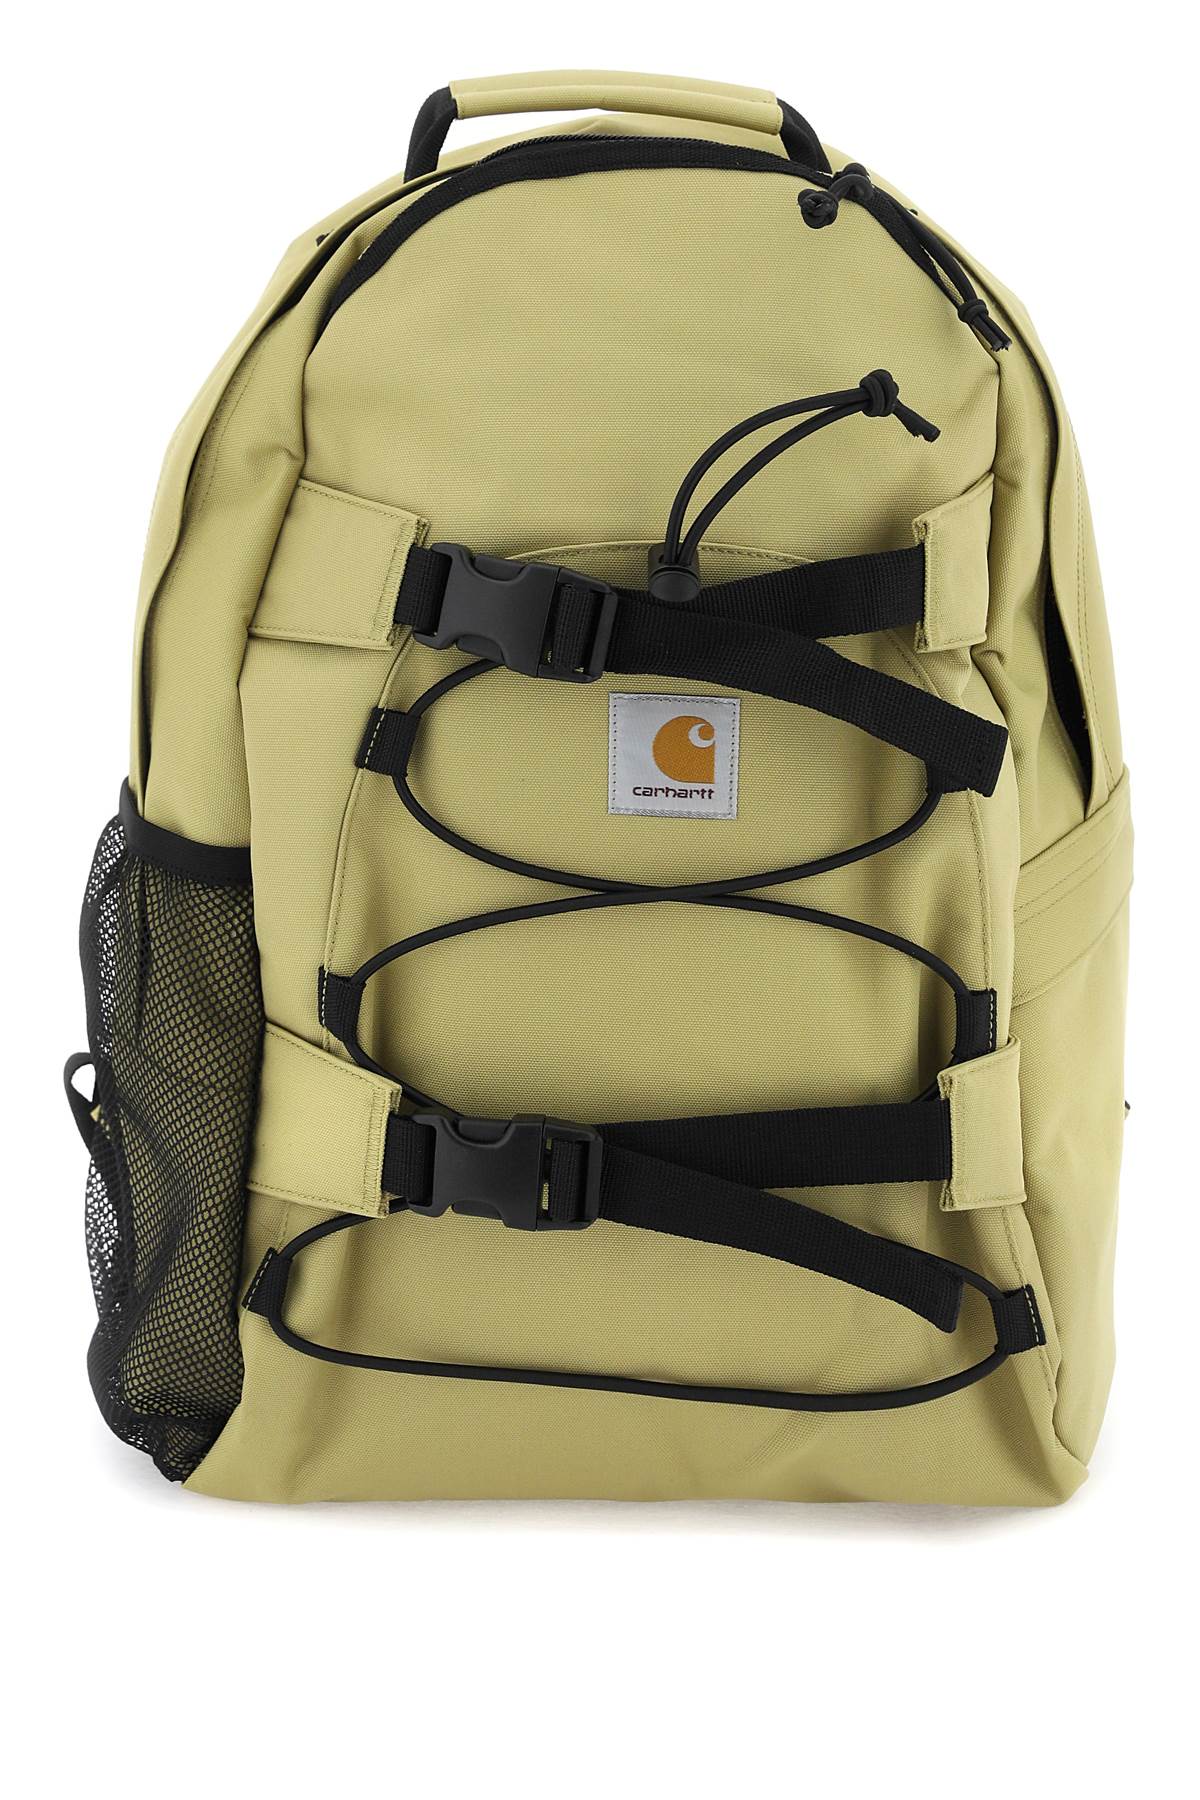 Carhartt wip kickflip backpack in recycled fabric-0